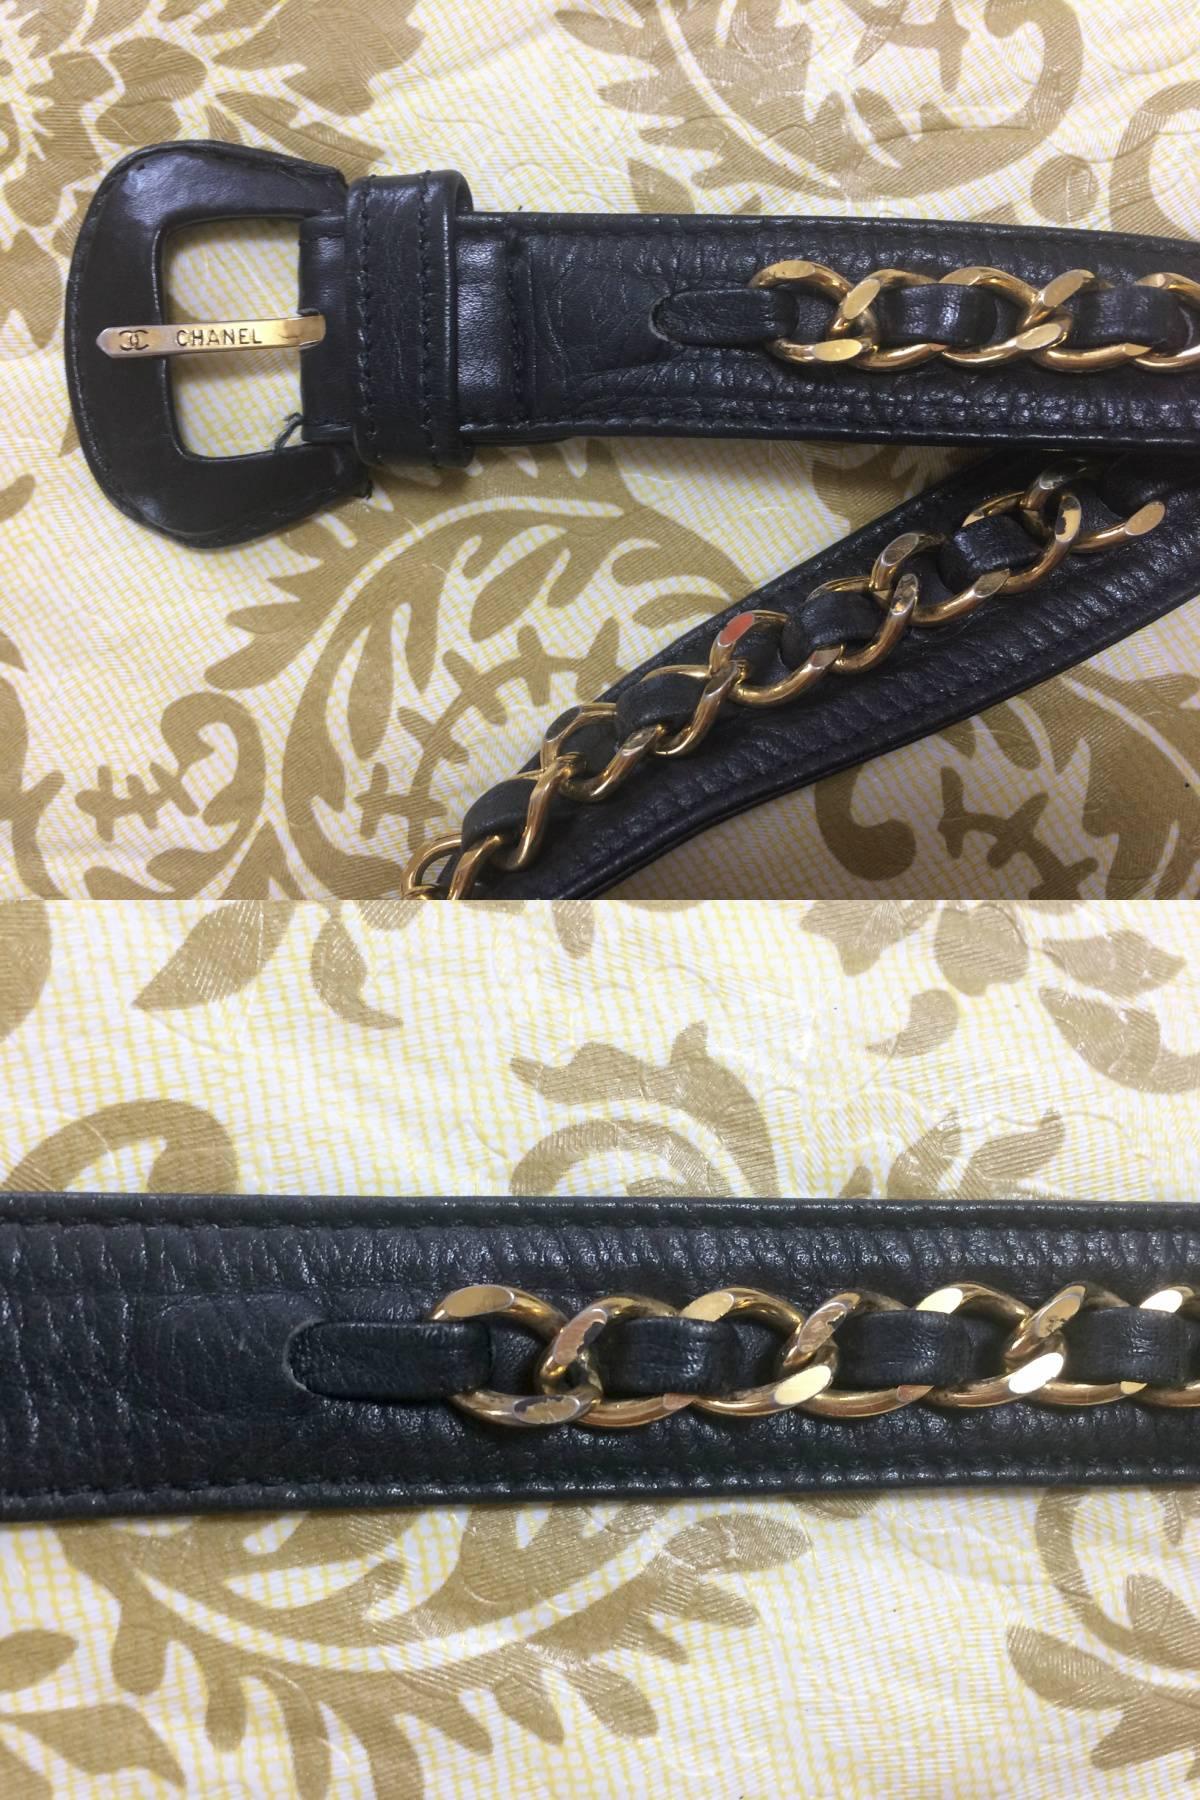 Vintage CHANEL black lamb waist bag, fanny pack with gold chain belt & CC motif. 5